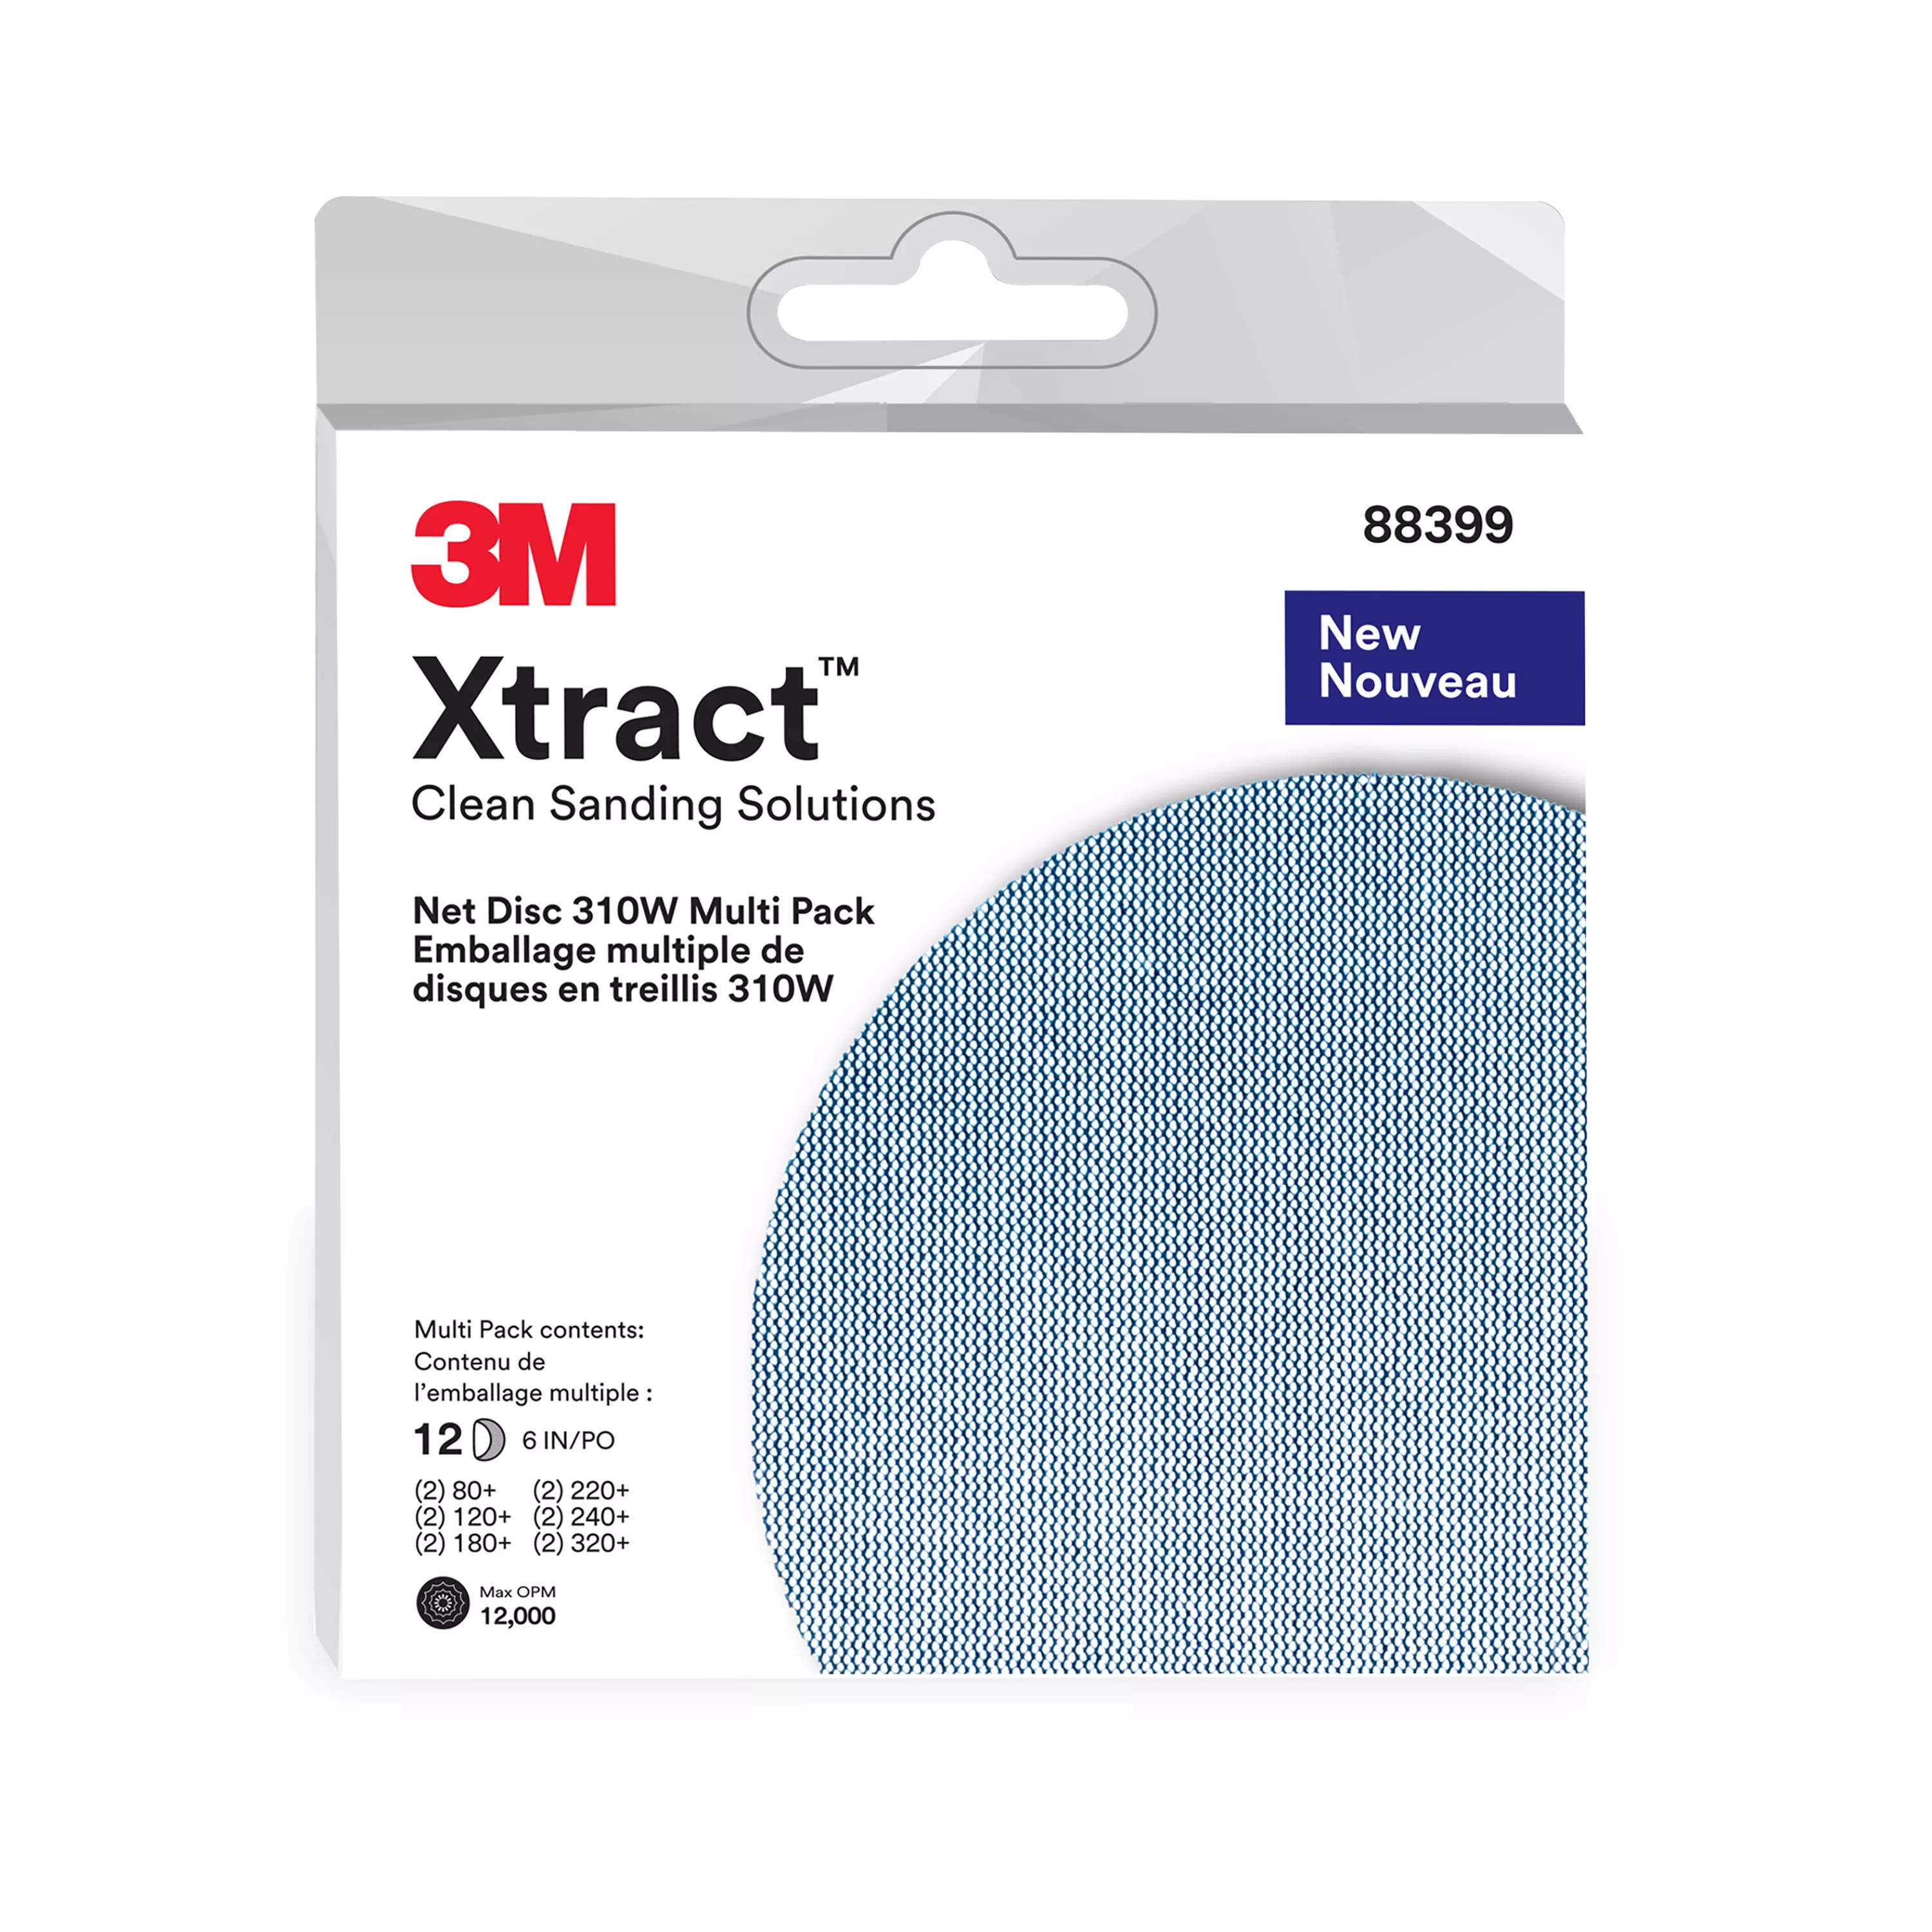 SKU 7100250855 | 3M Xtract™ Net Disc 310W